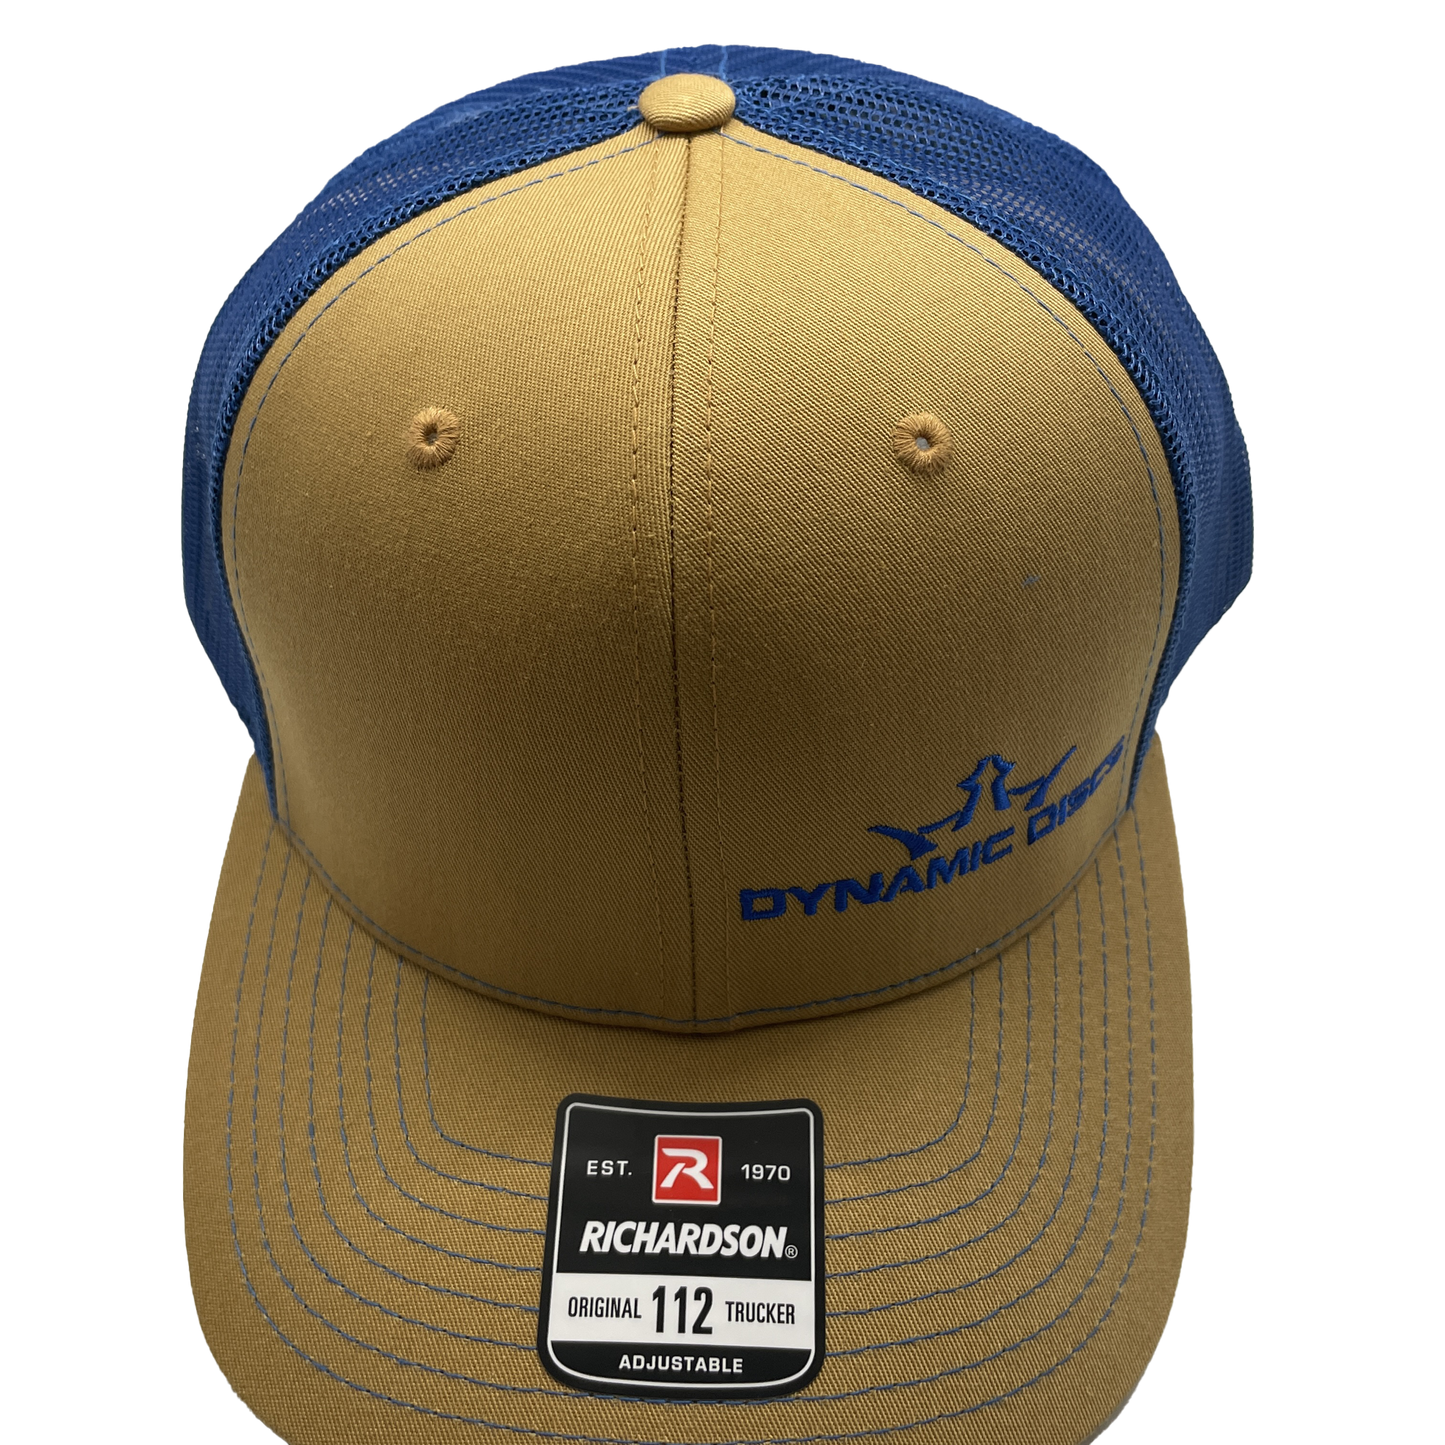 Dynamic Discs King D's Snapback Hat